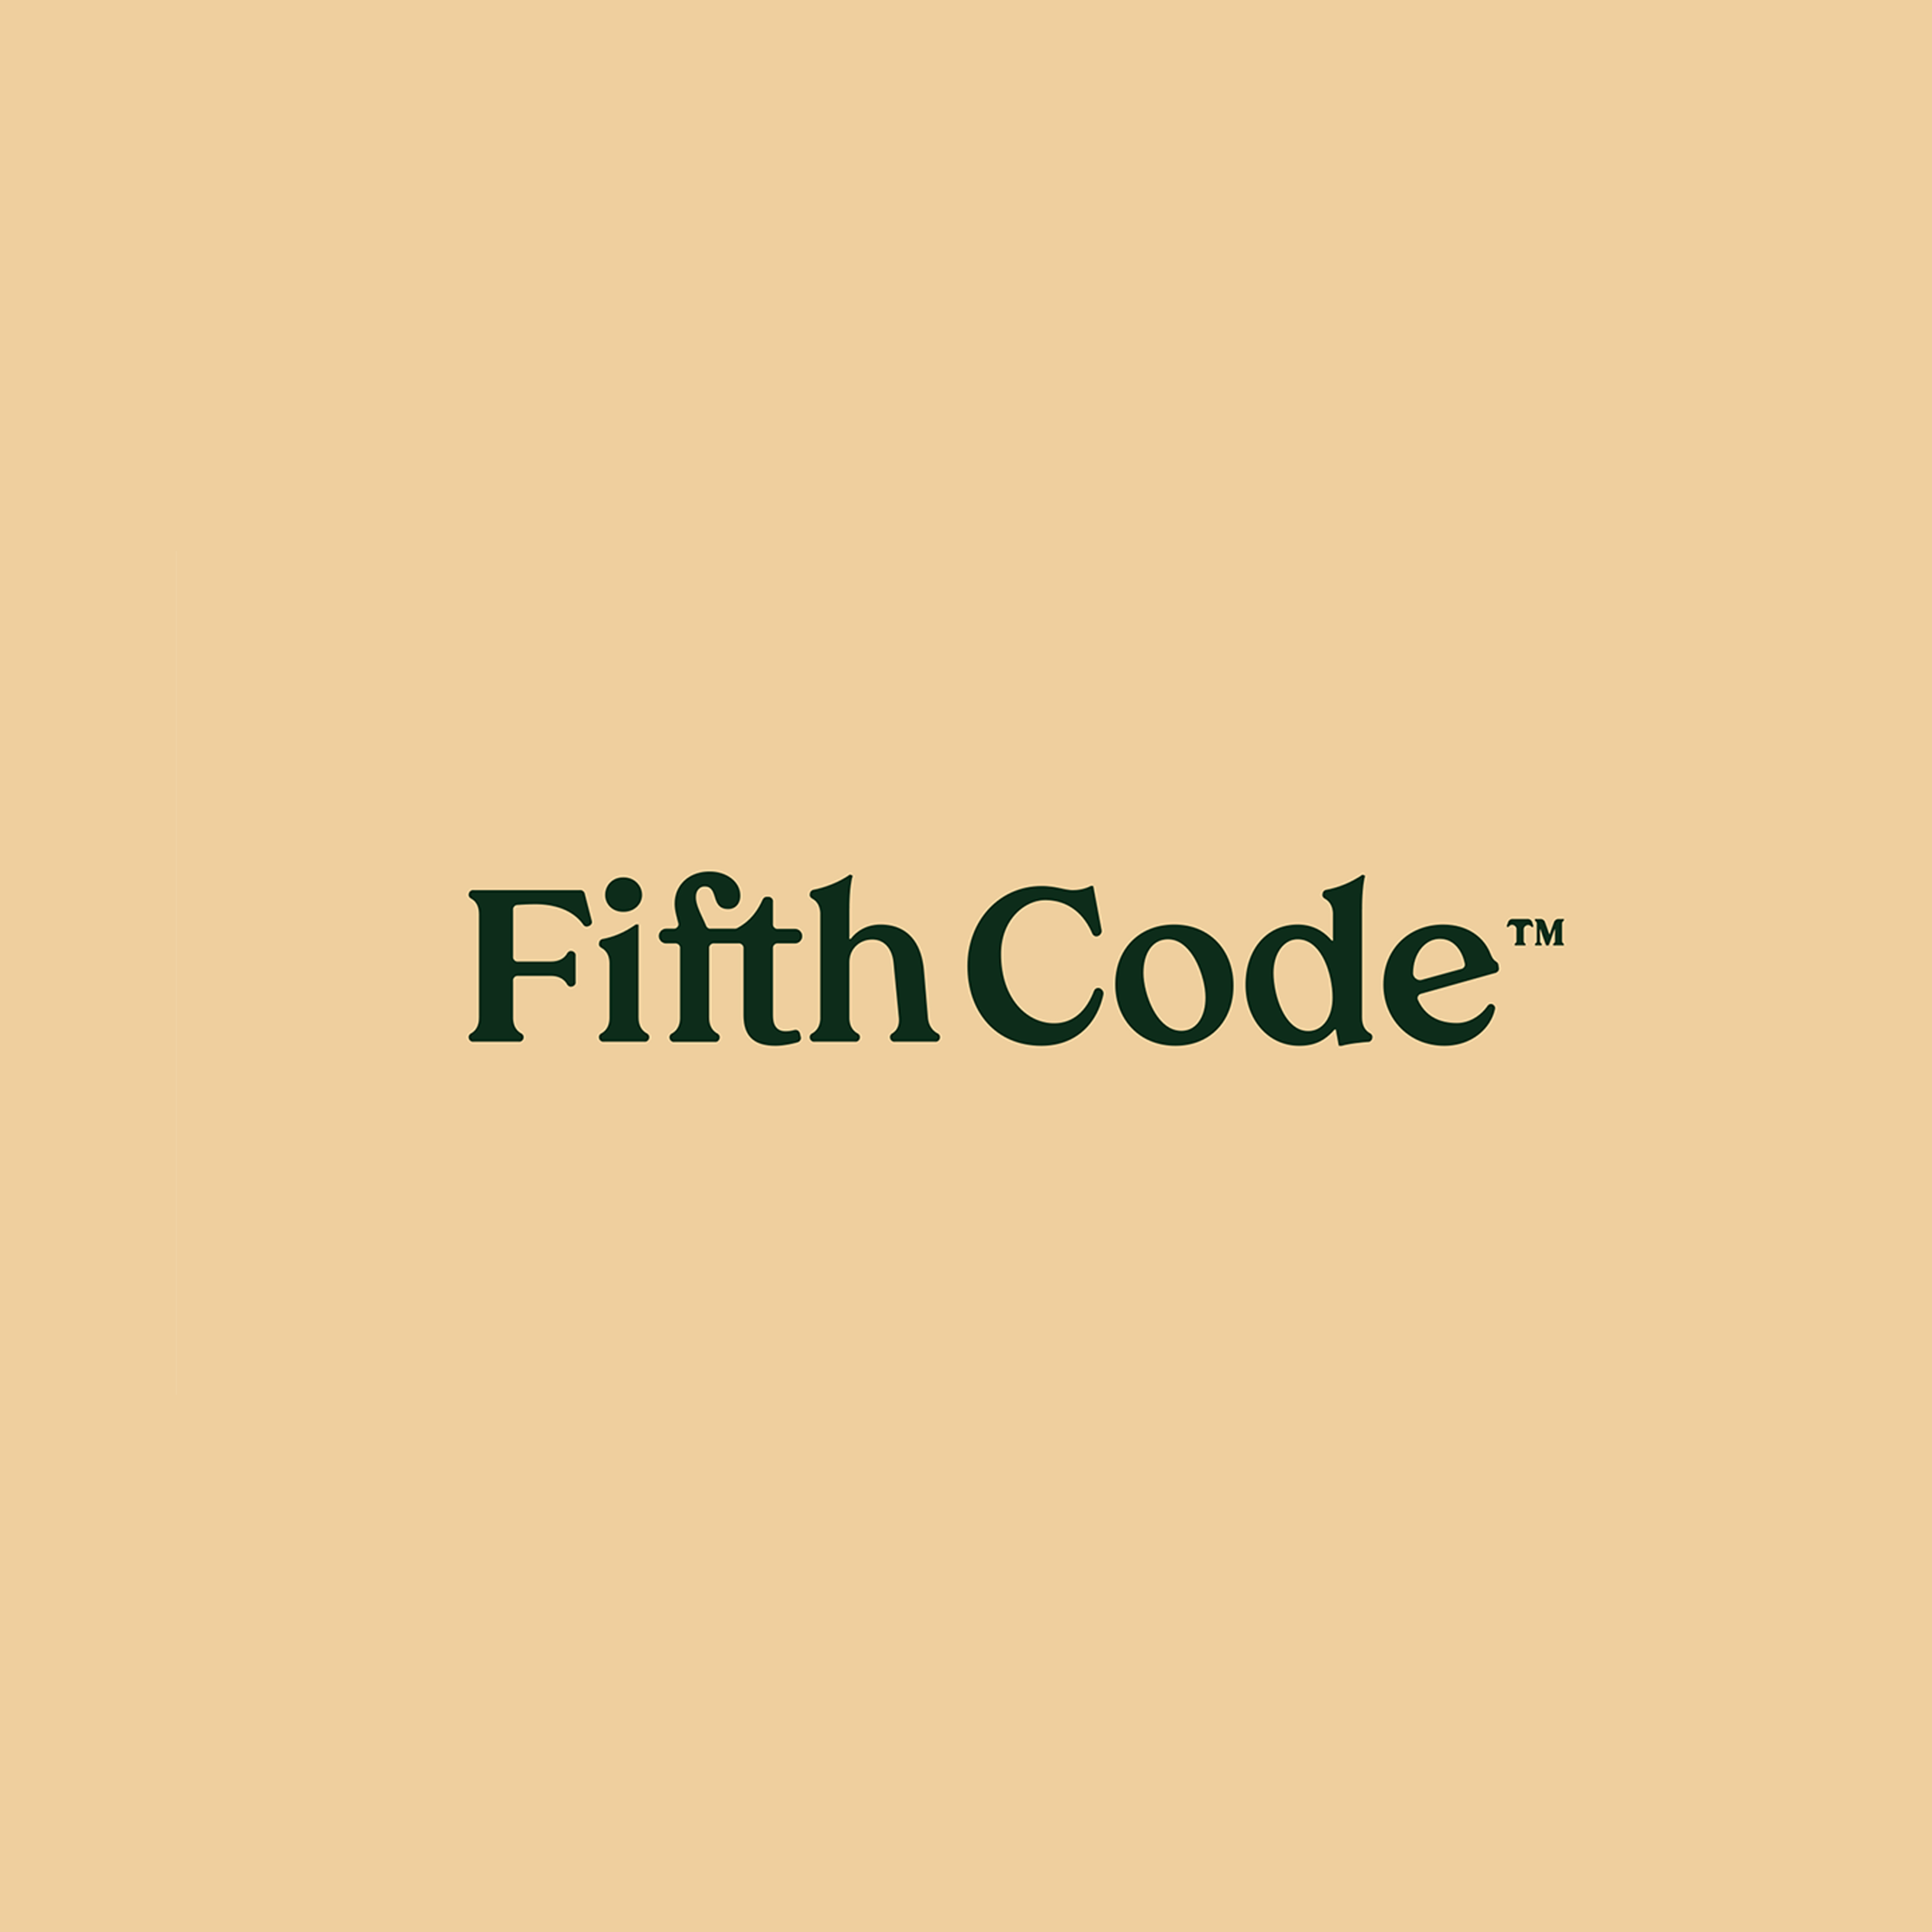 Fifth Code